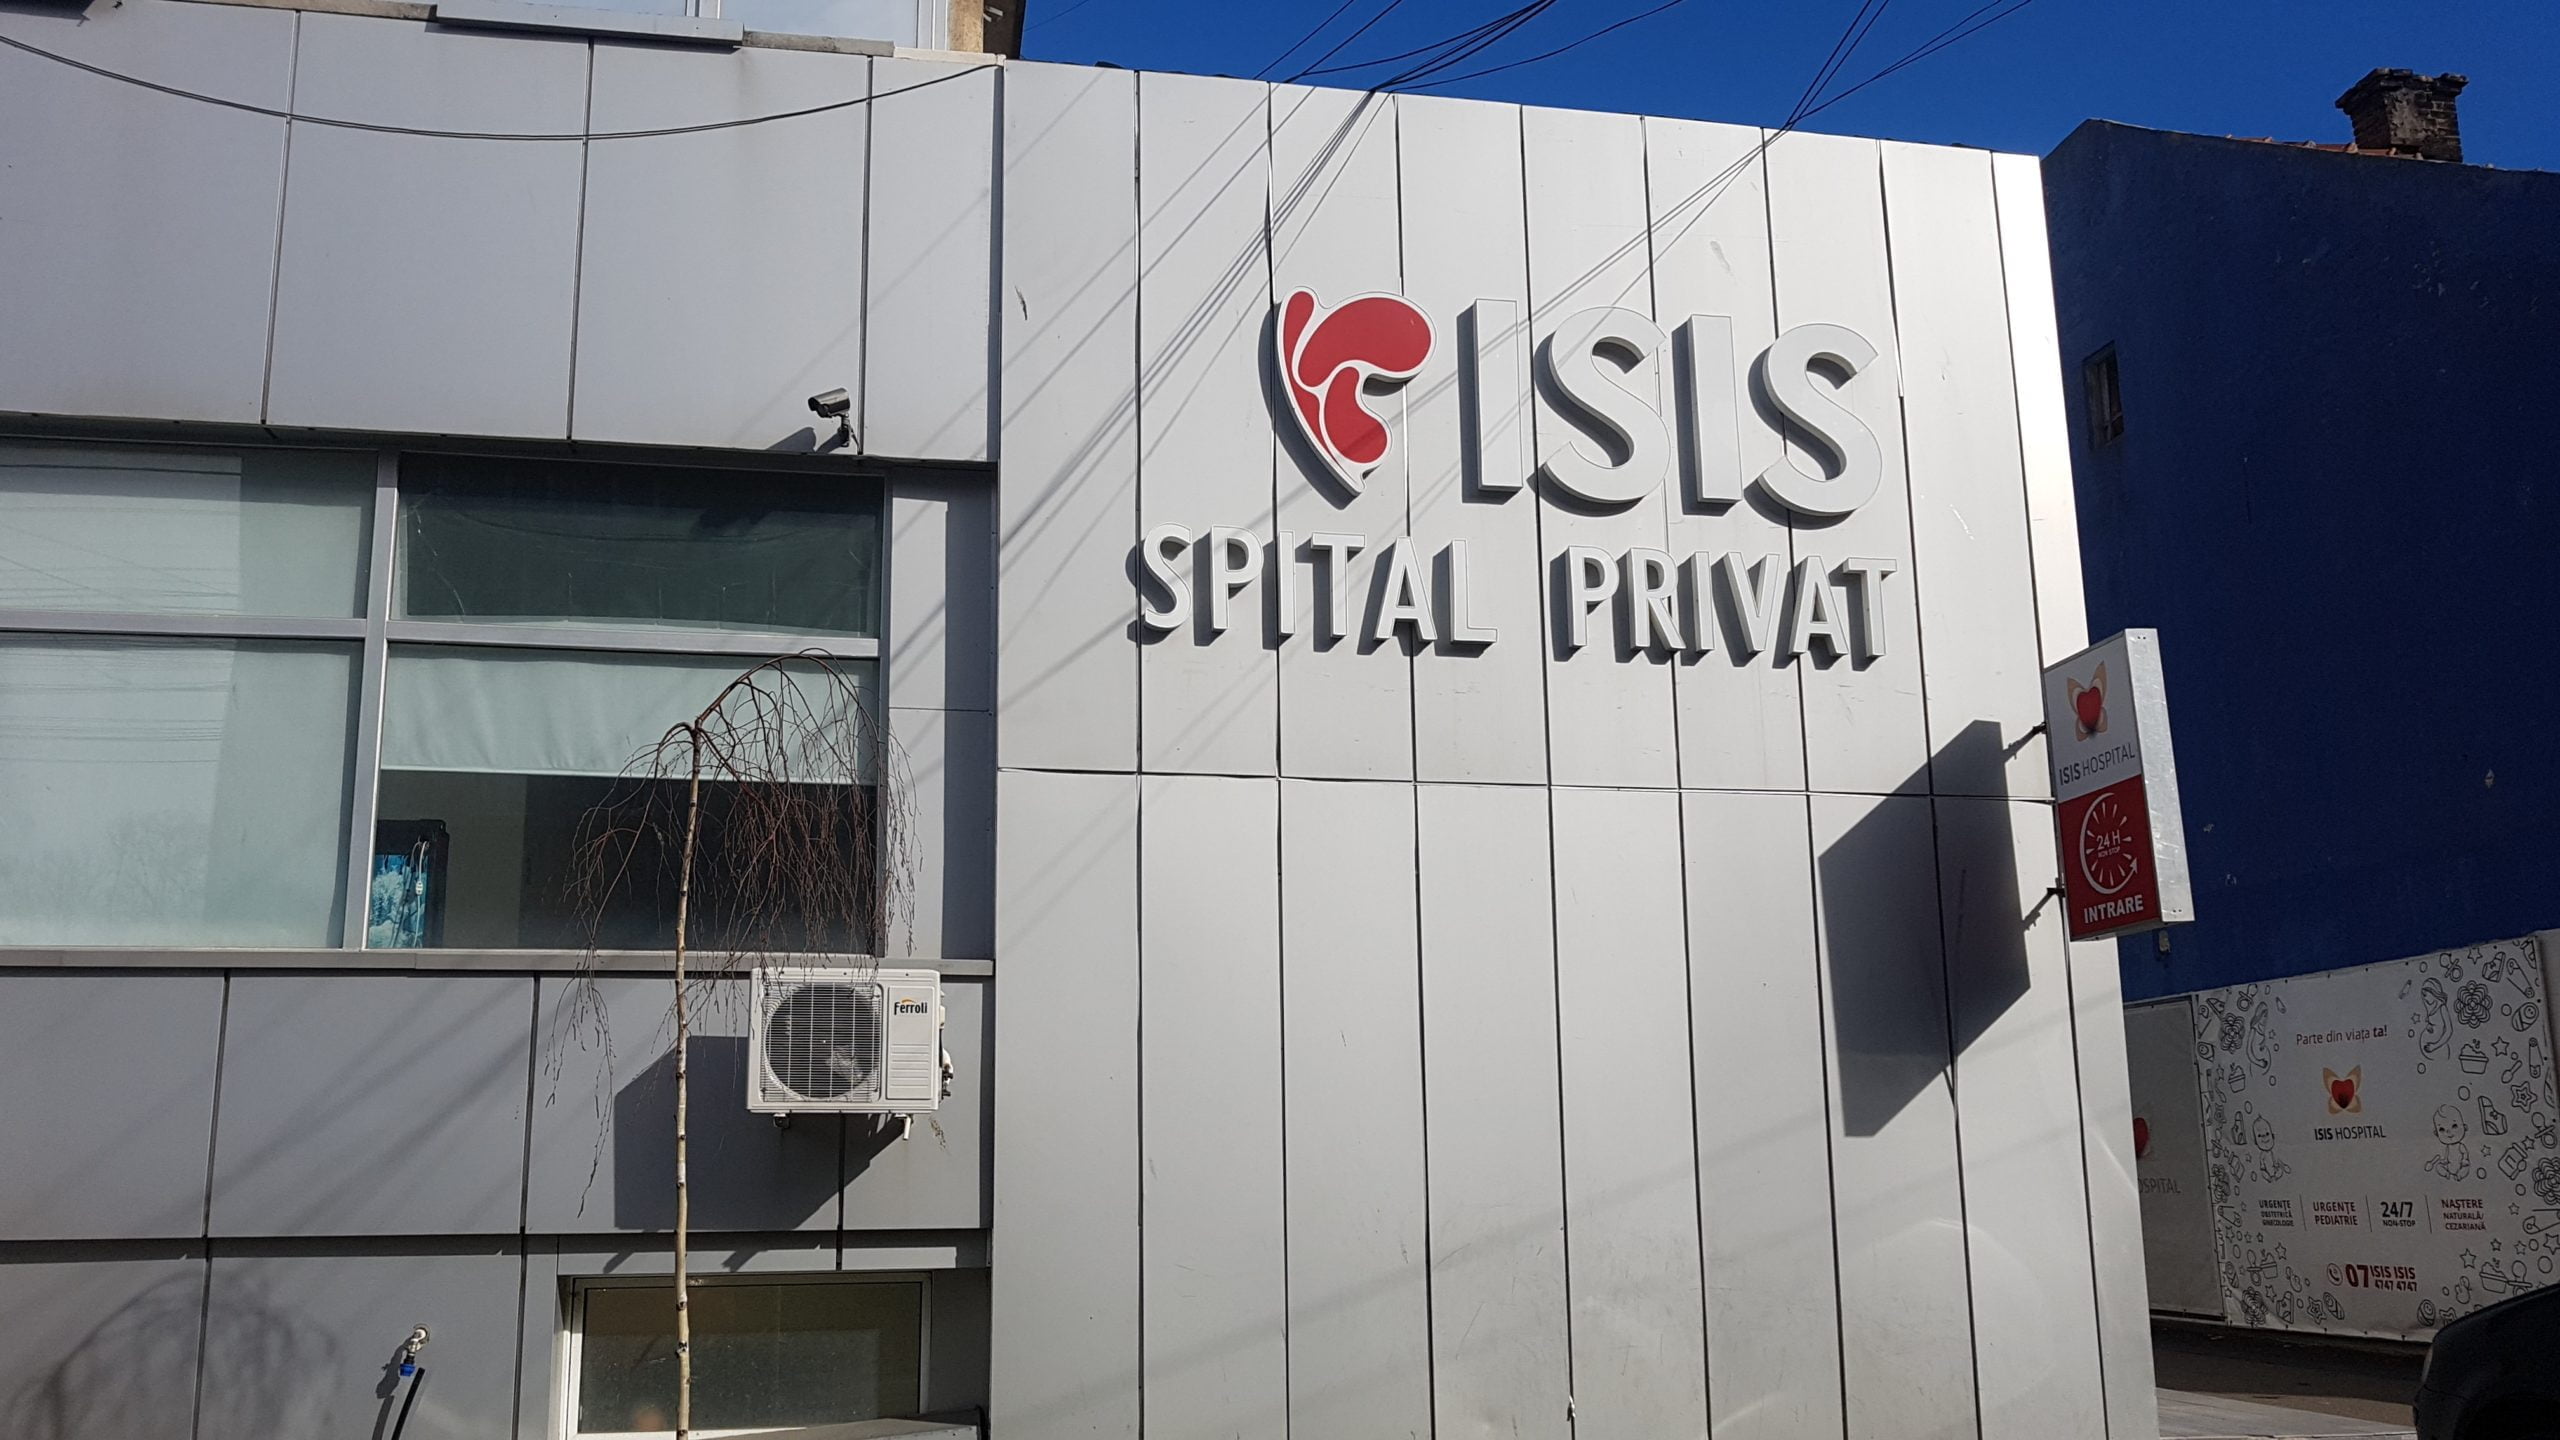 Fostul spital privat ISIS, actual Armonia